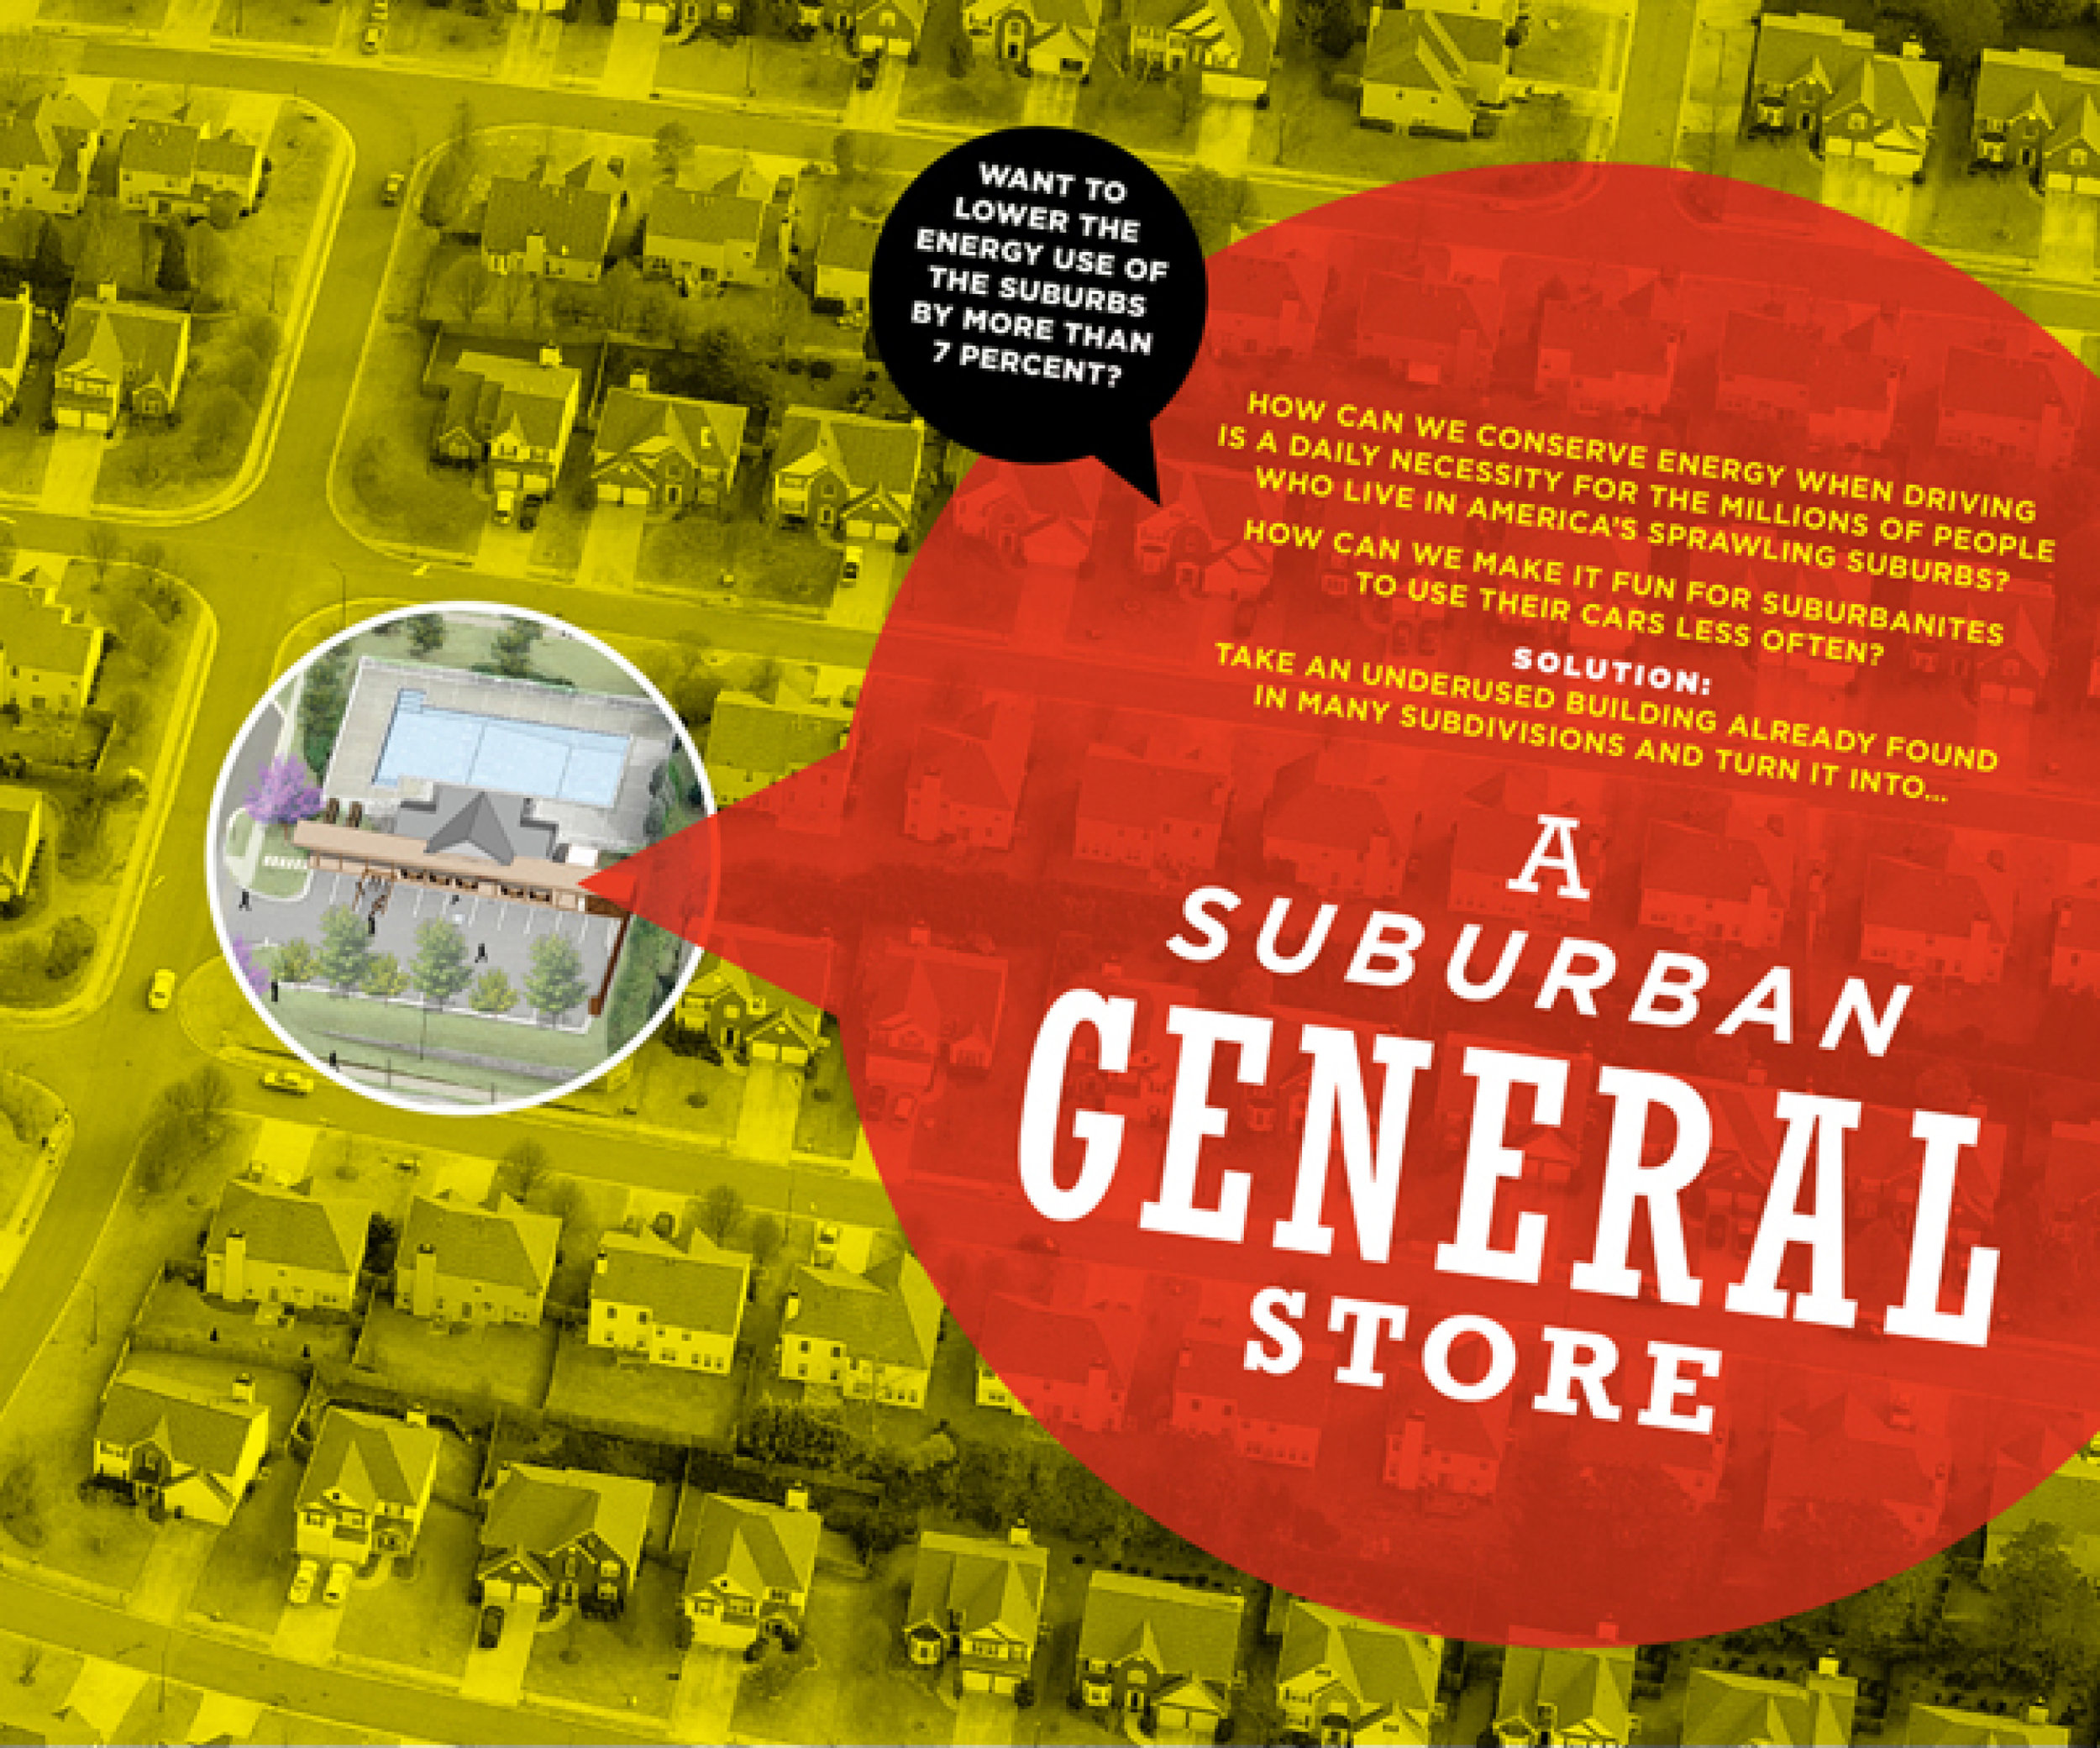 Suburban_General_Store_Web 1.jpg